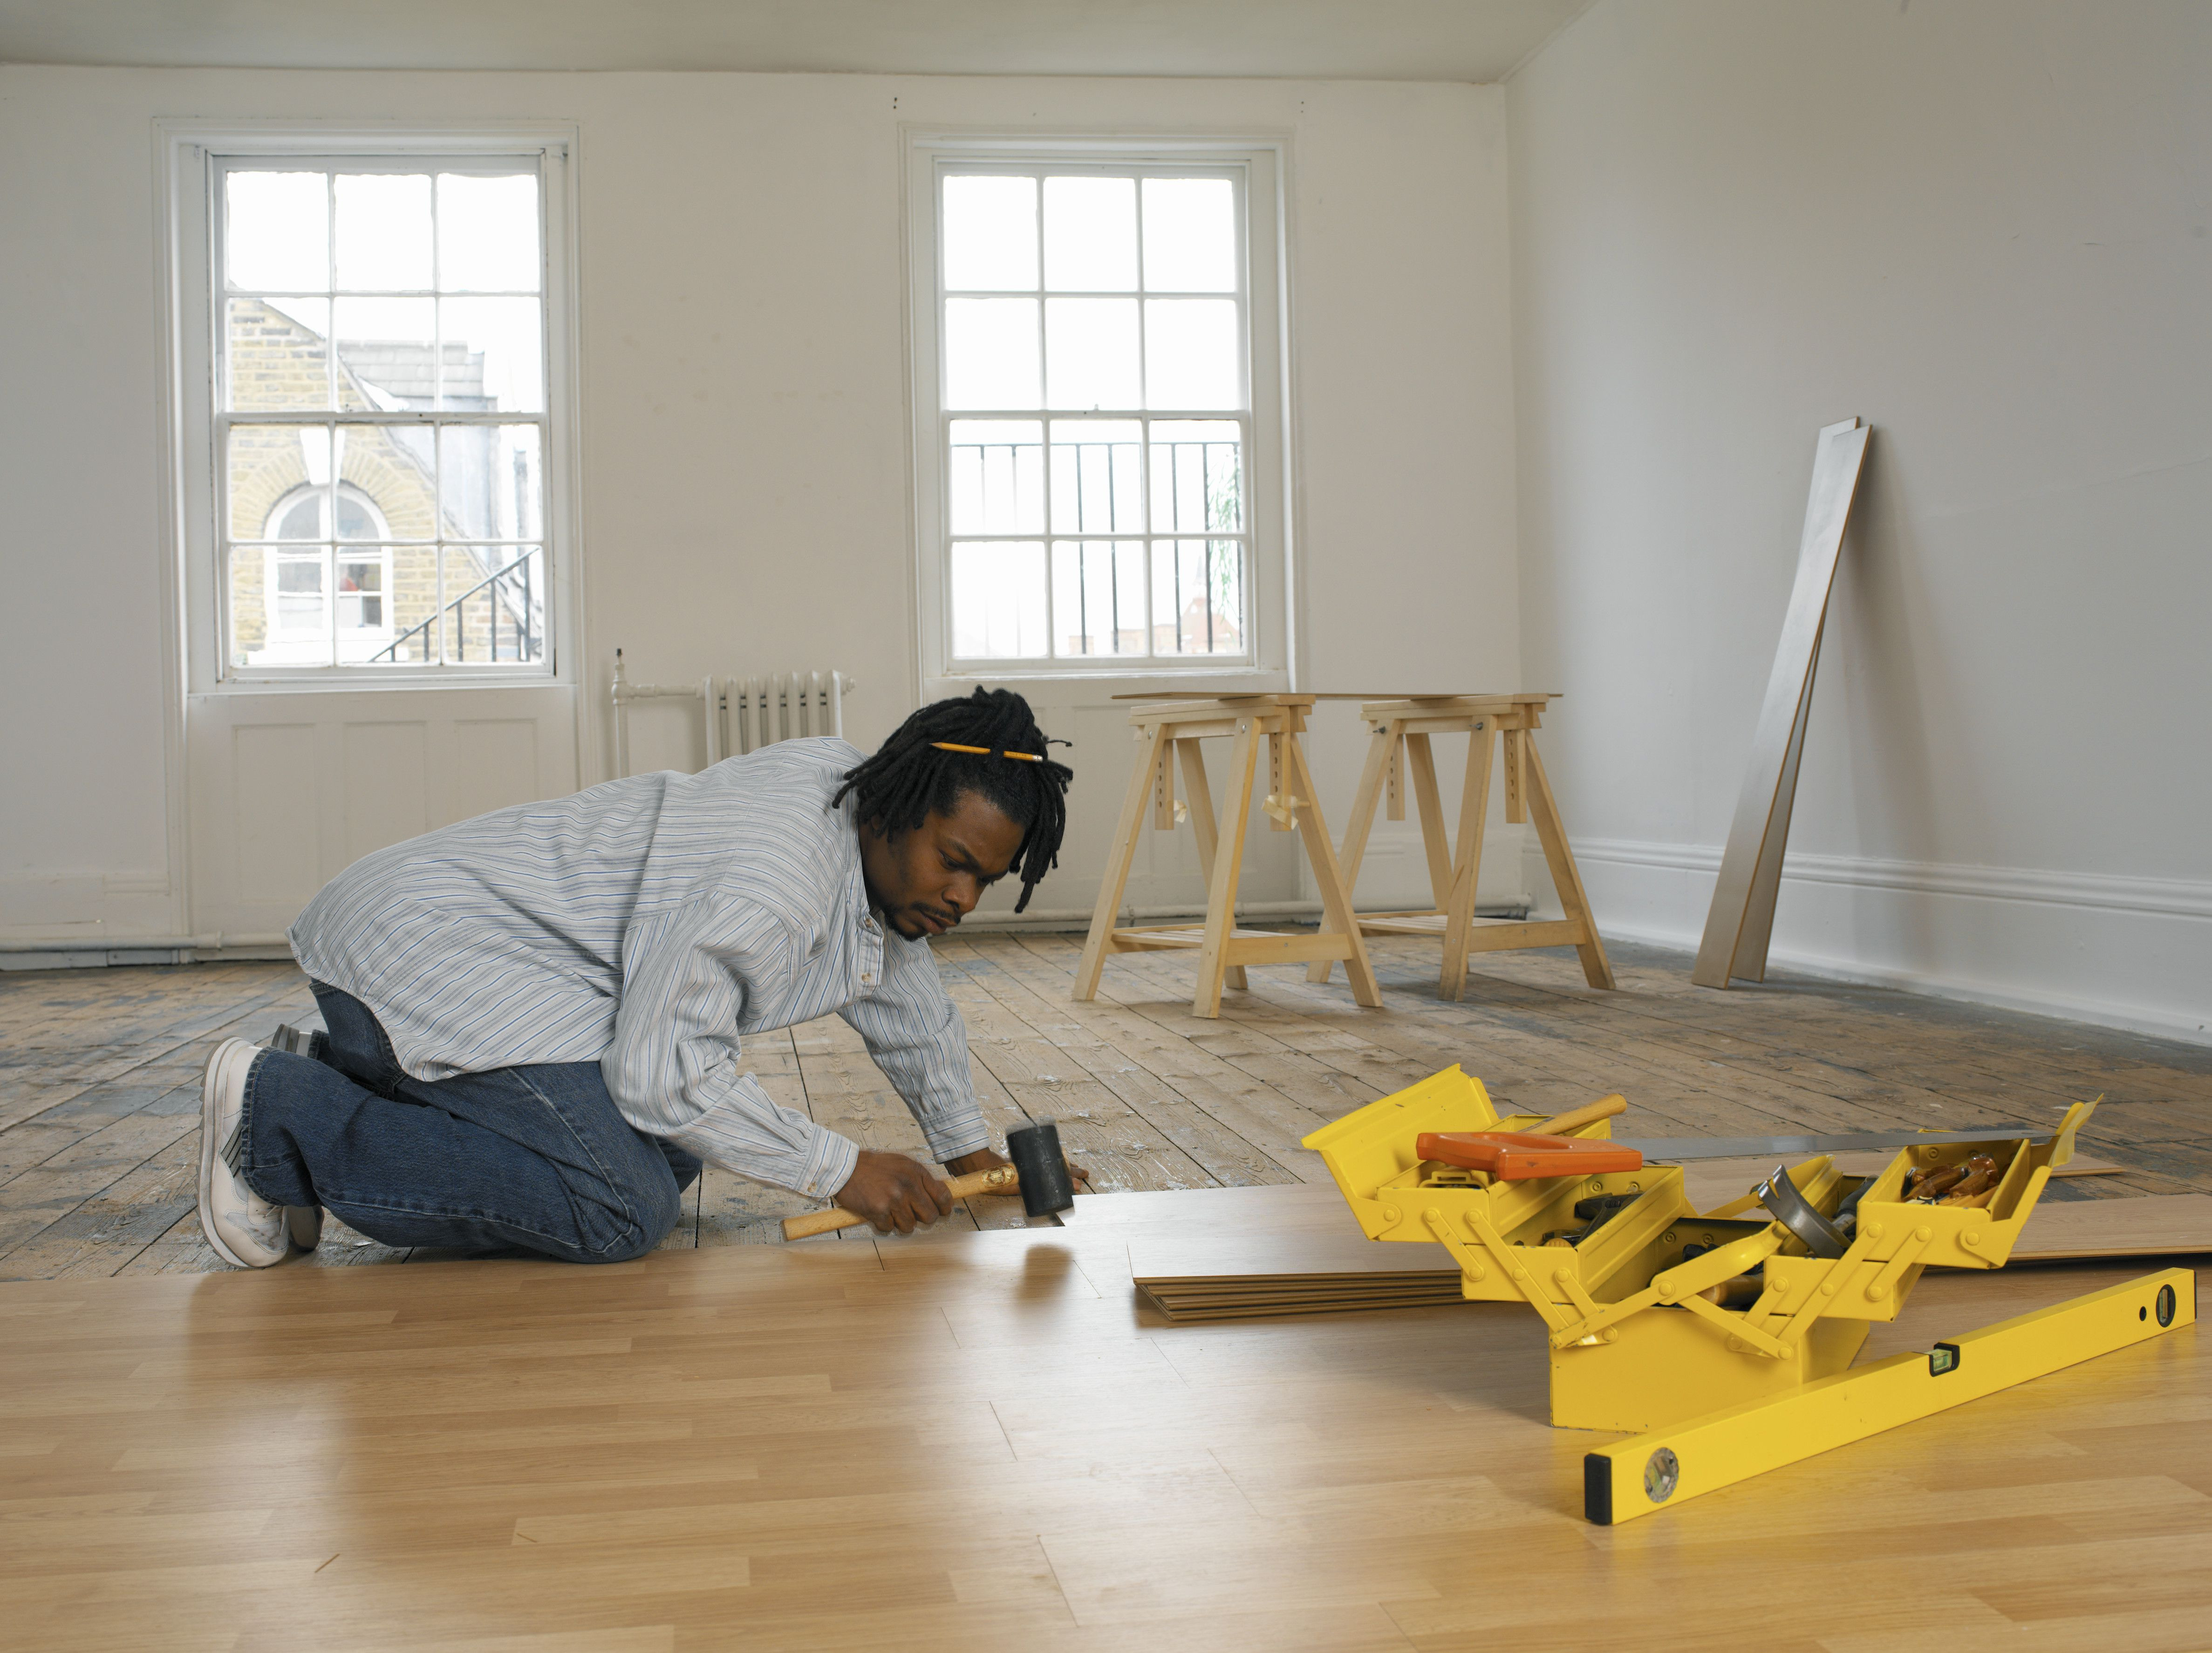 engineered hardwood flooring uk of ikea flooring review overview regarding young man laying floor 200199826 001 57e96a973df78c690f719440